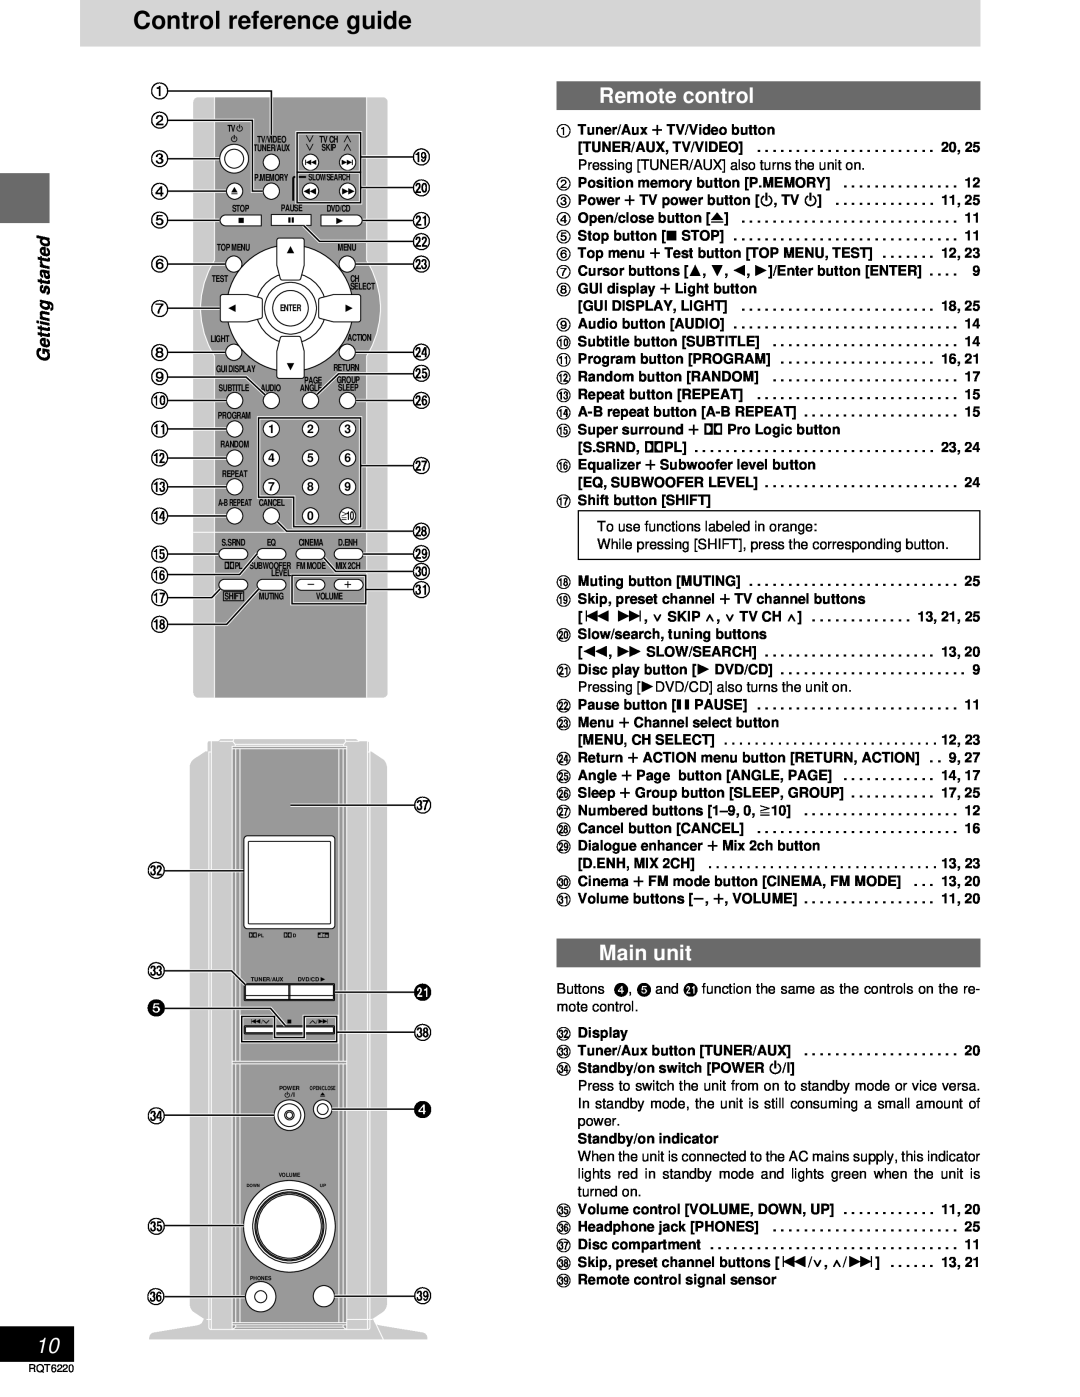 Panasonic SC-DM3 warranty Remote control, Main unit, Control reference guide 